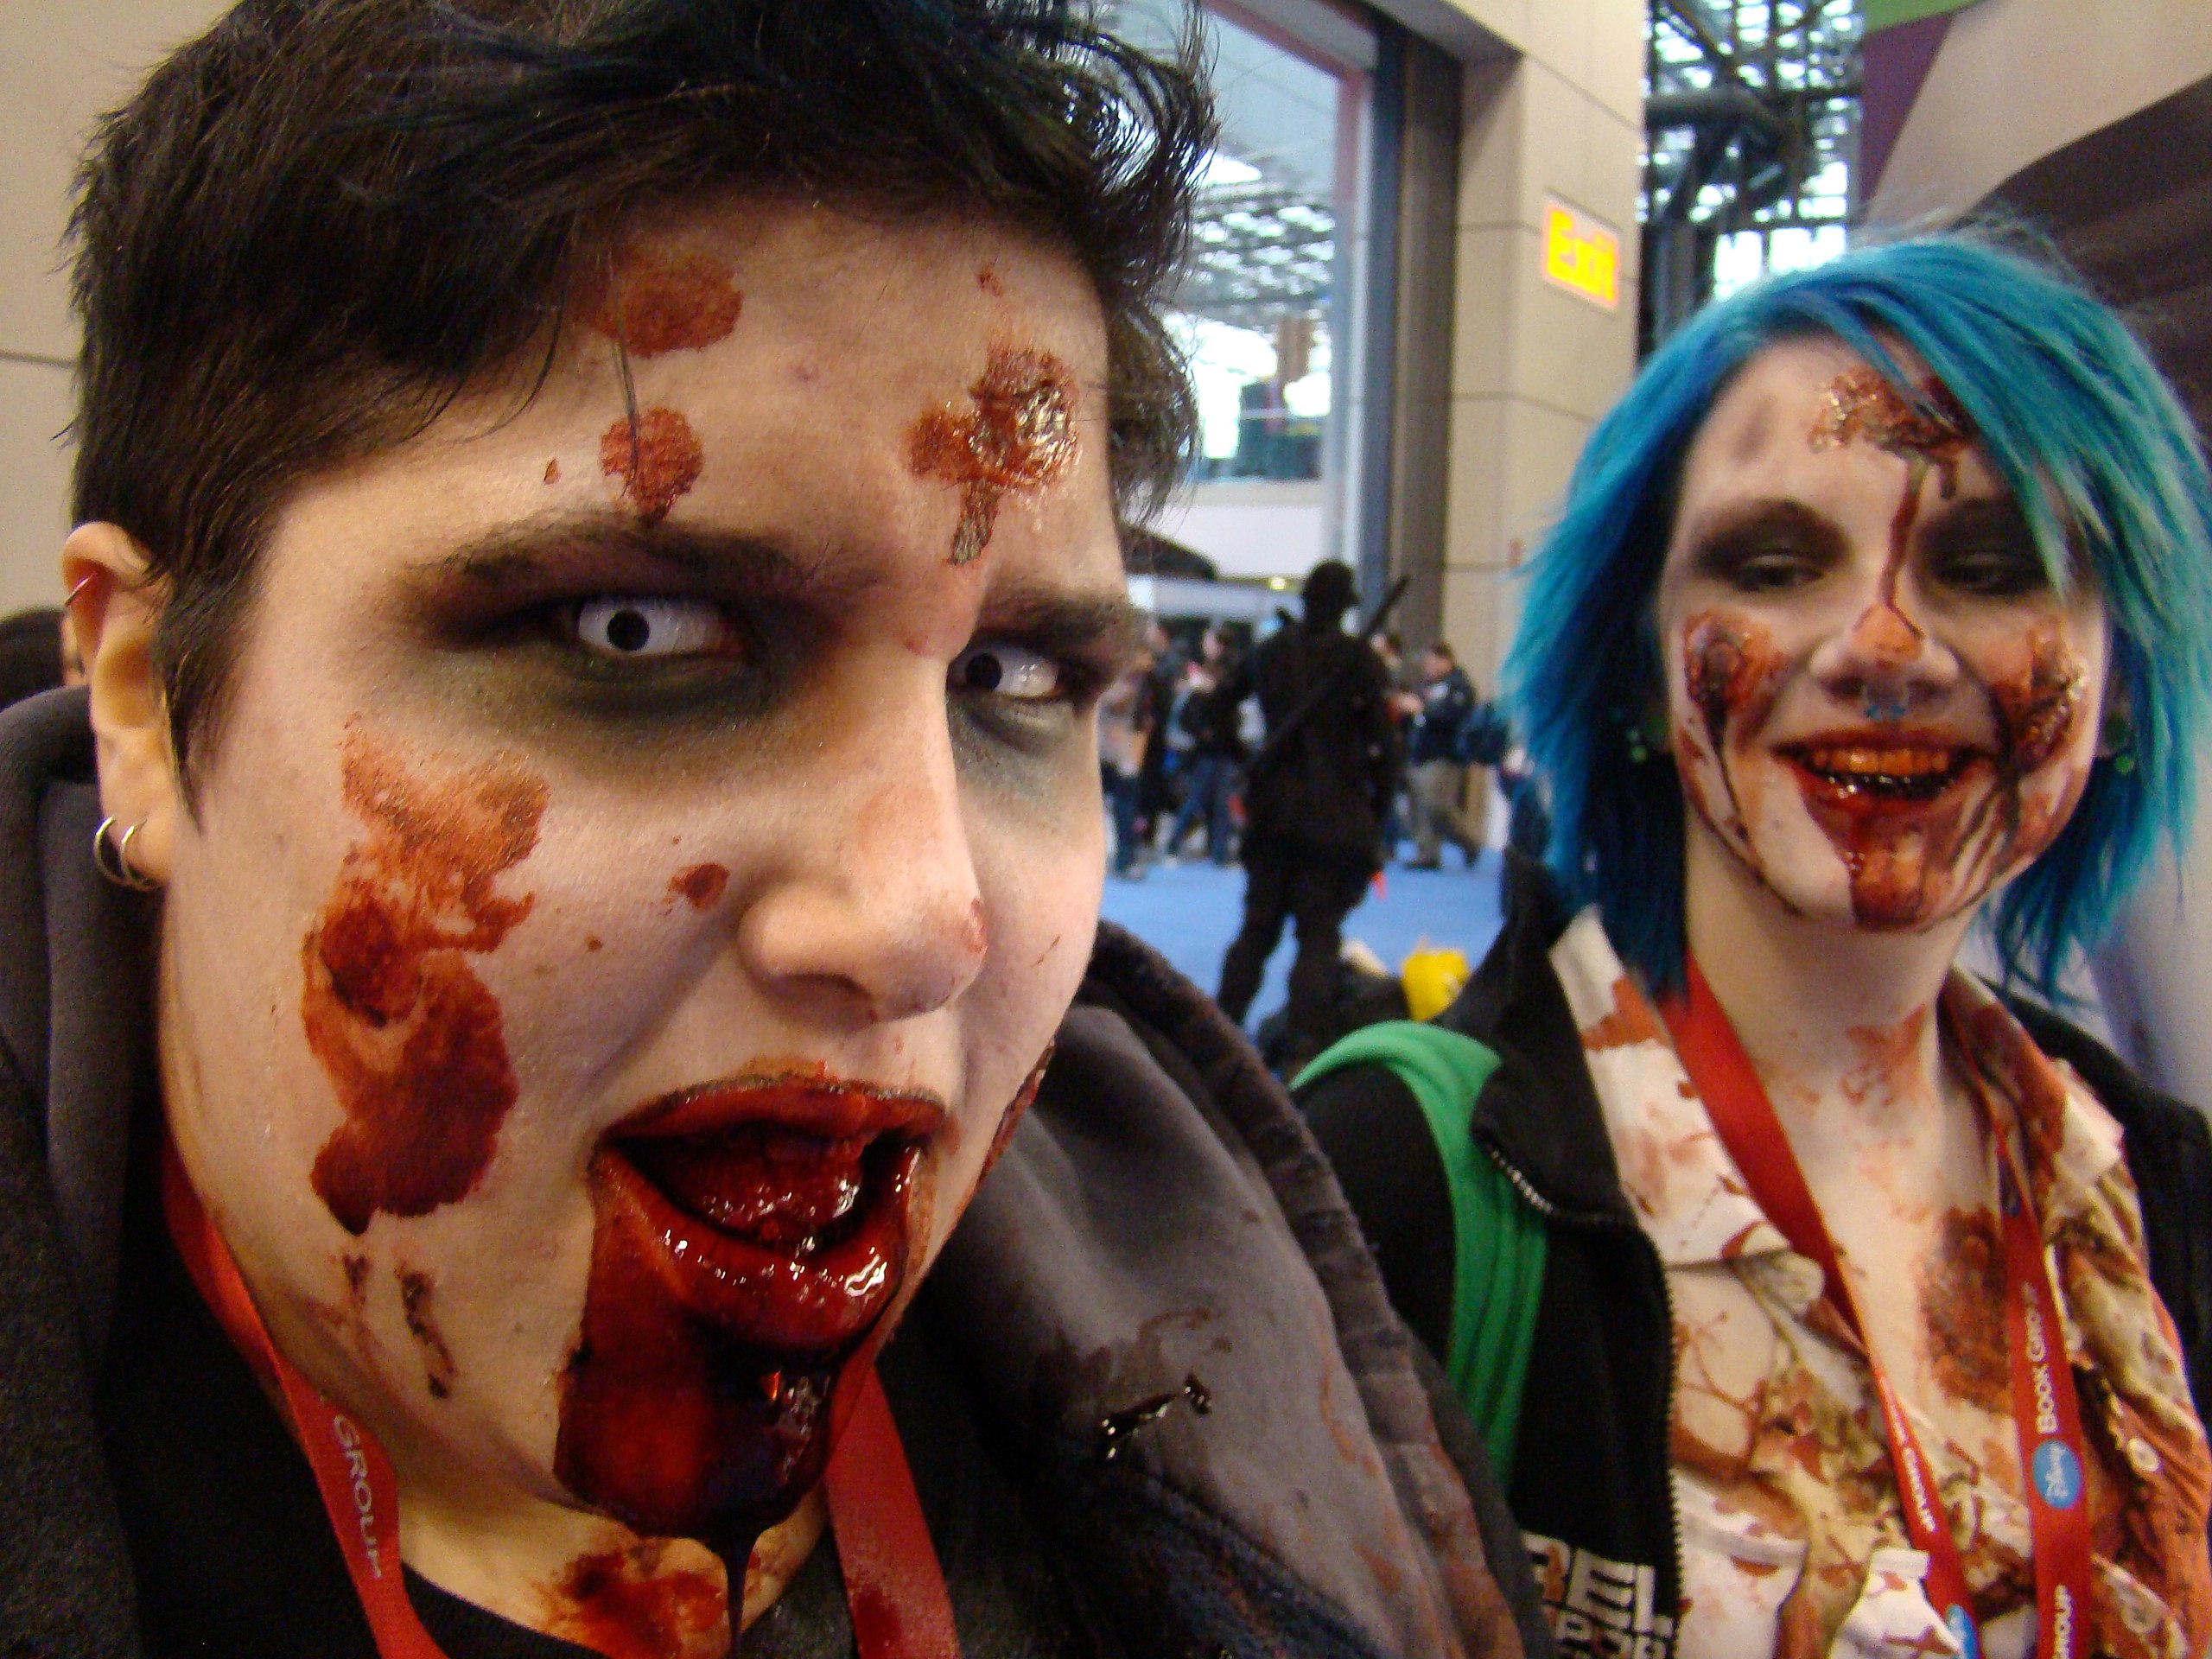 File:Zombie costume portrait.jpg - Wikipedia